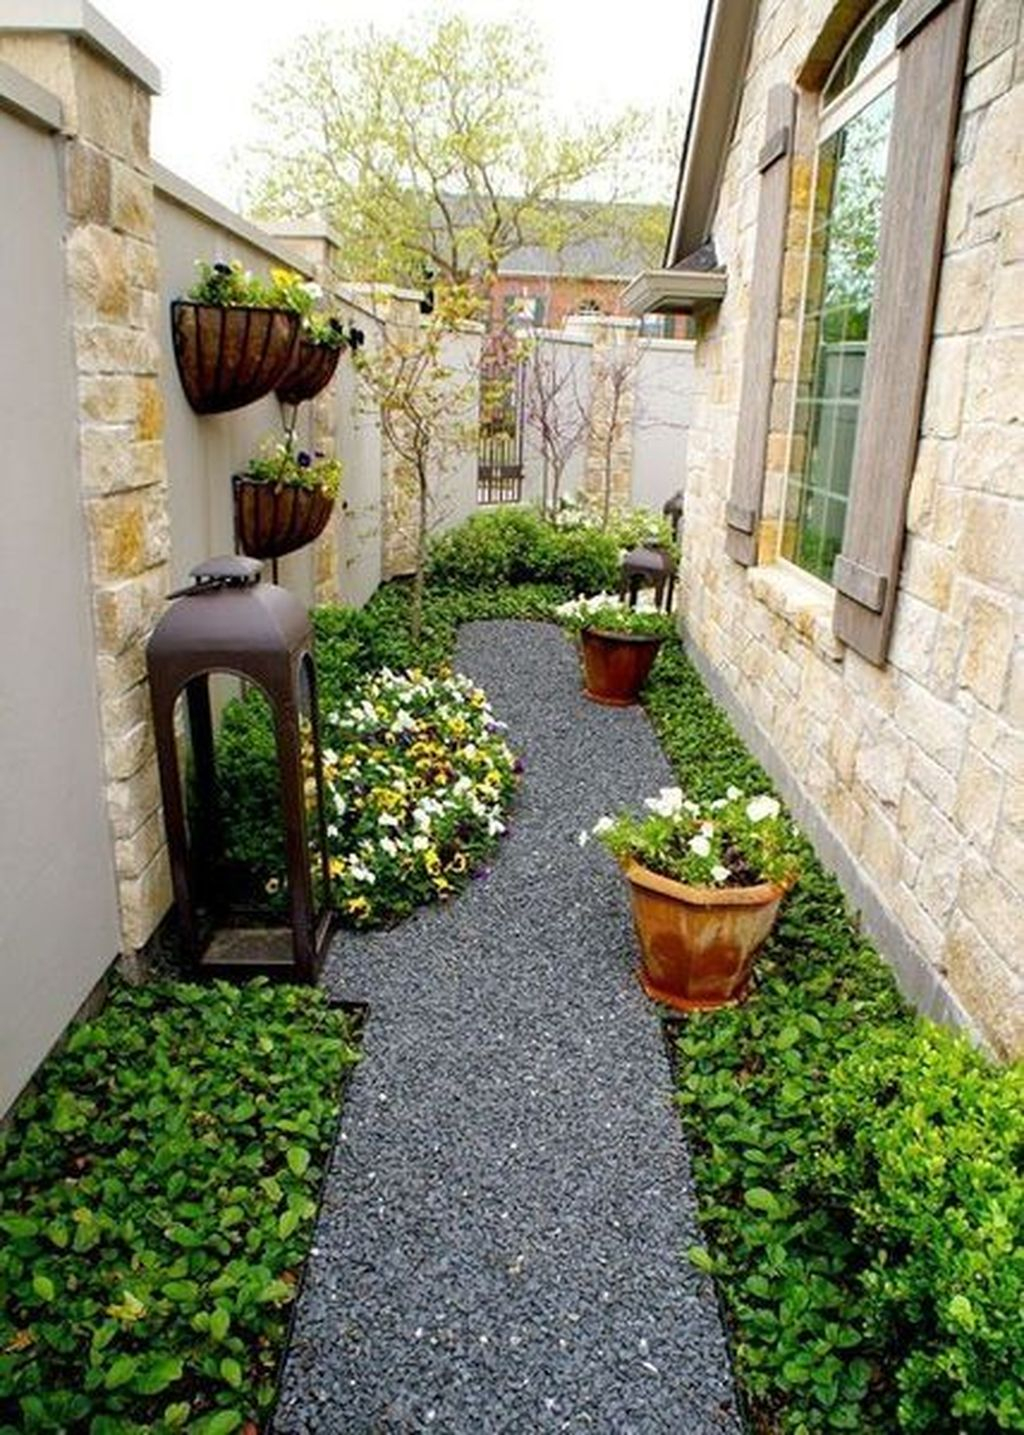 47 Fascinating Side Yard And Backyard Gravel Garden Design Ideas That